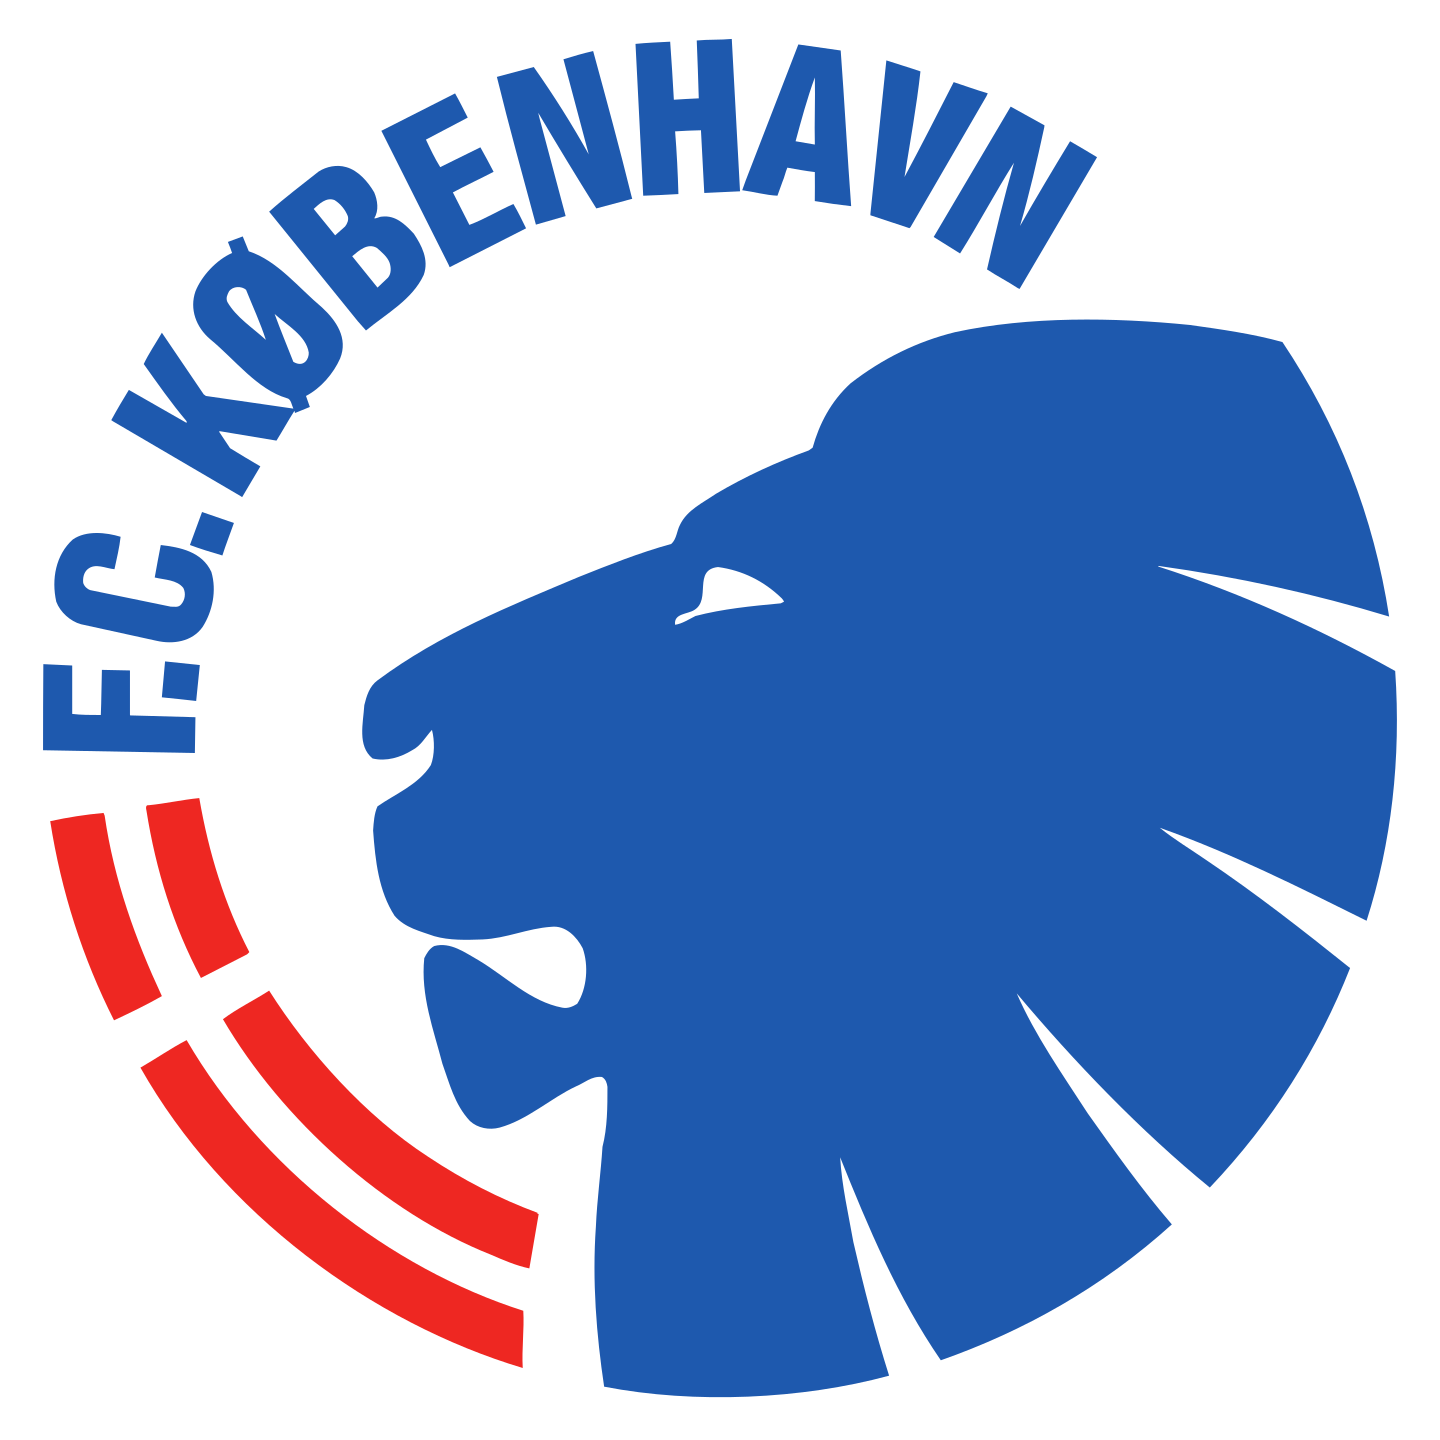 fc copenhagen logo 2 - F.C. Copenhague - F.C. København Logo